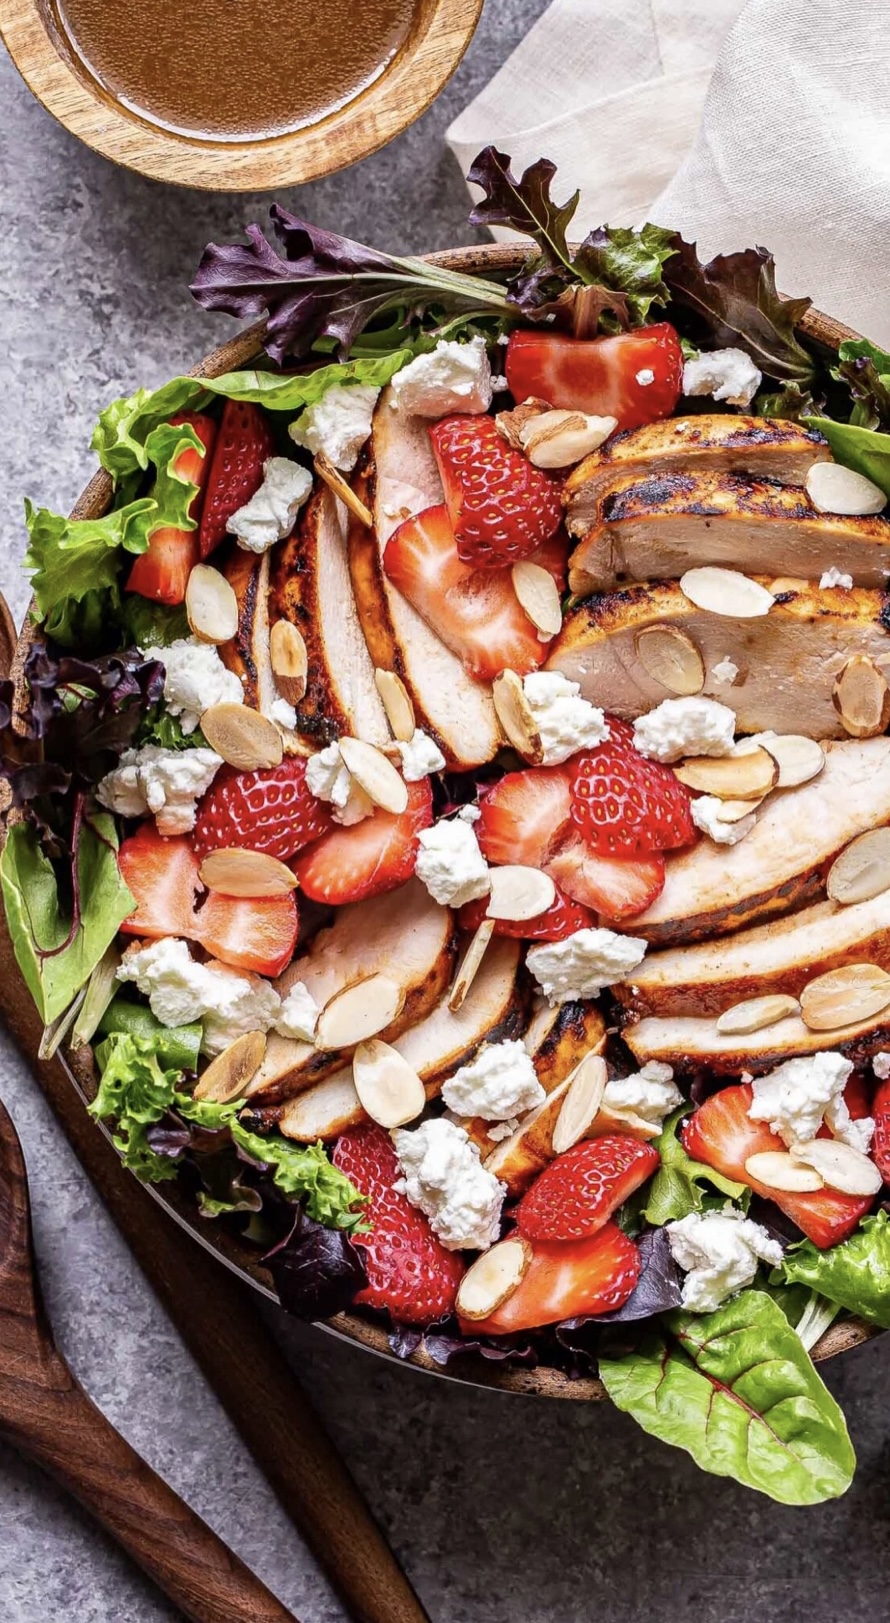 strawberry chicken salad recipe